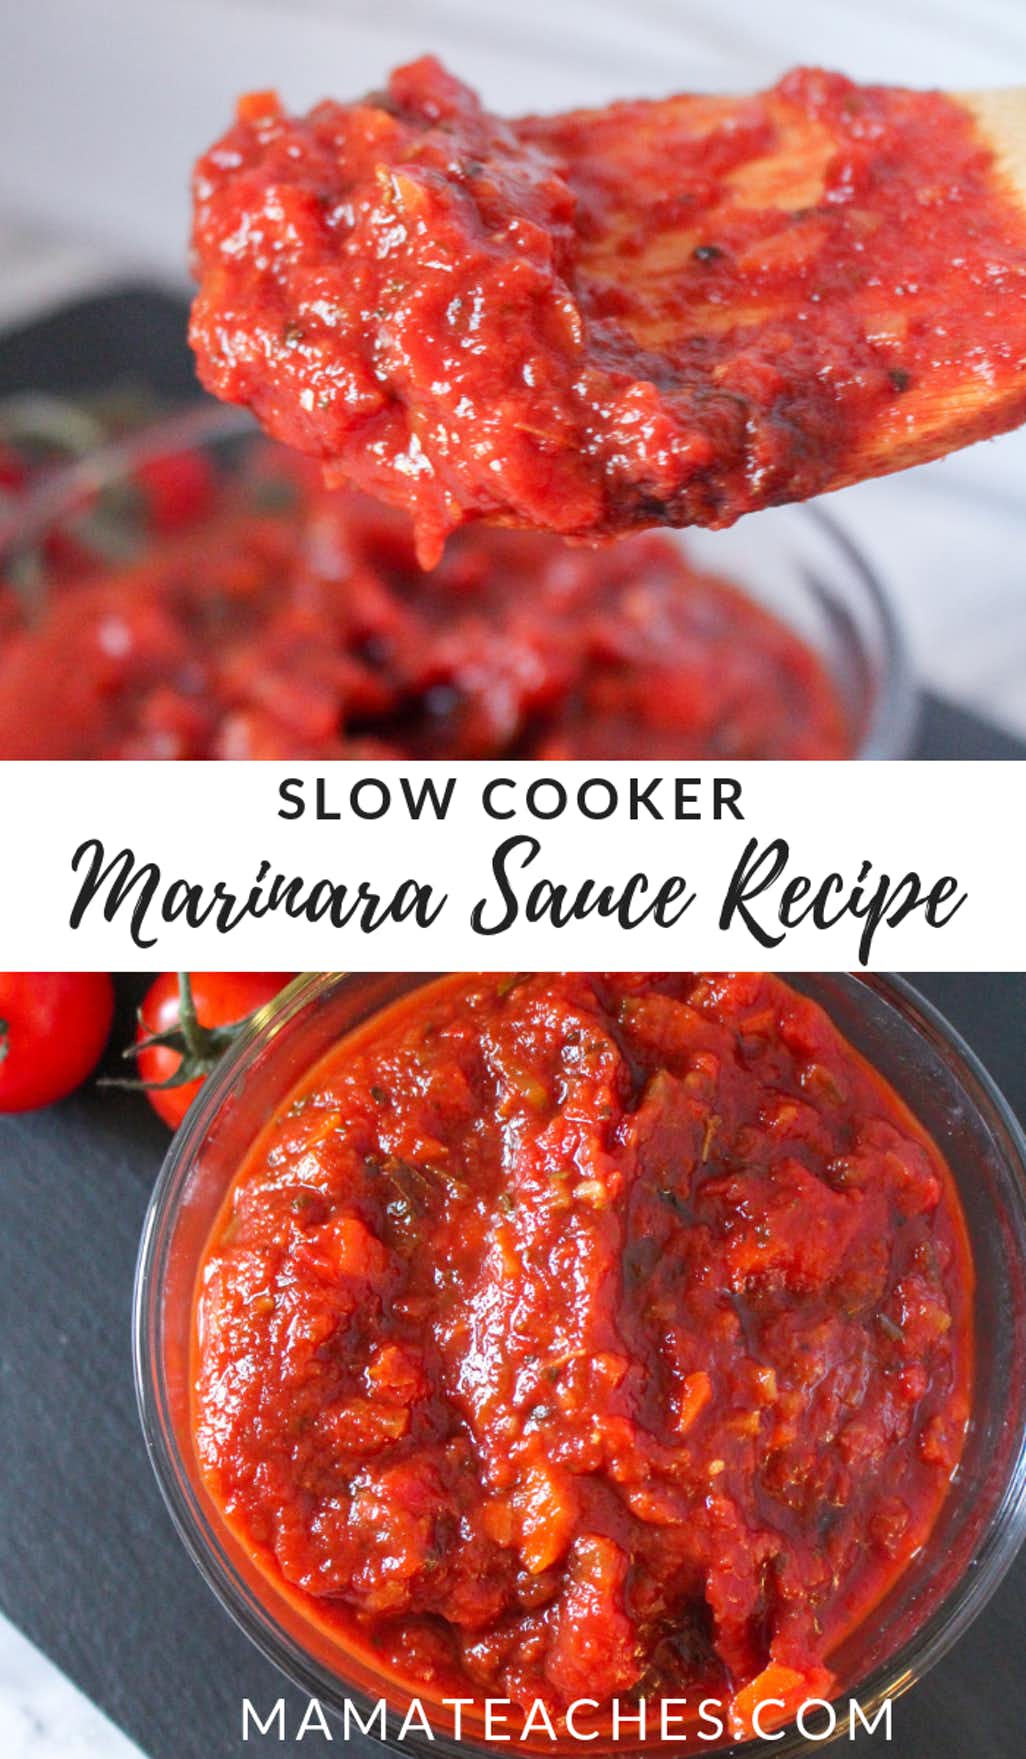 Easy Slow Cooker Spaghetti Sauce Recipe